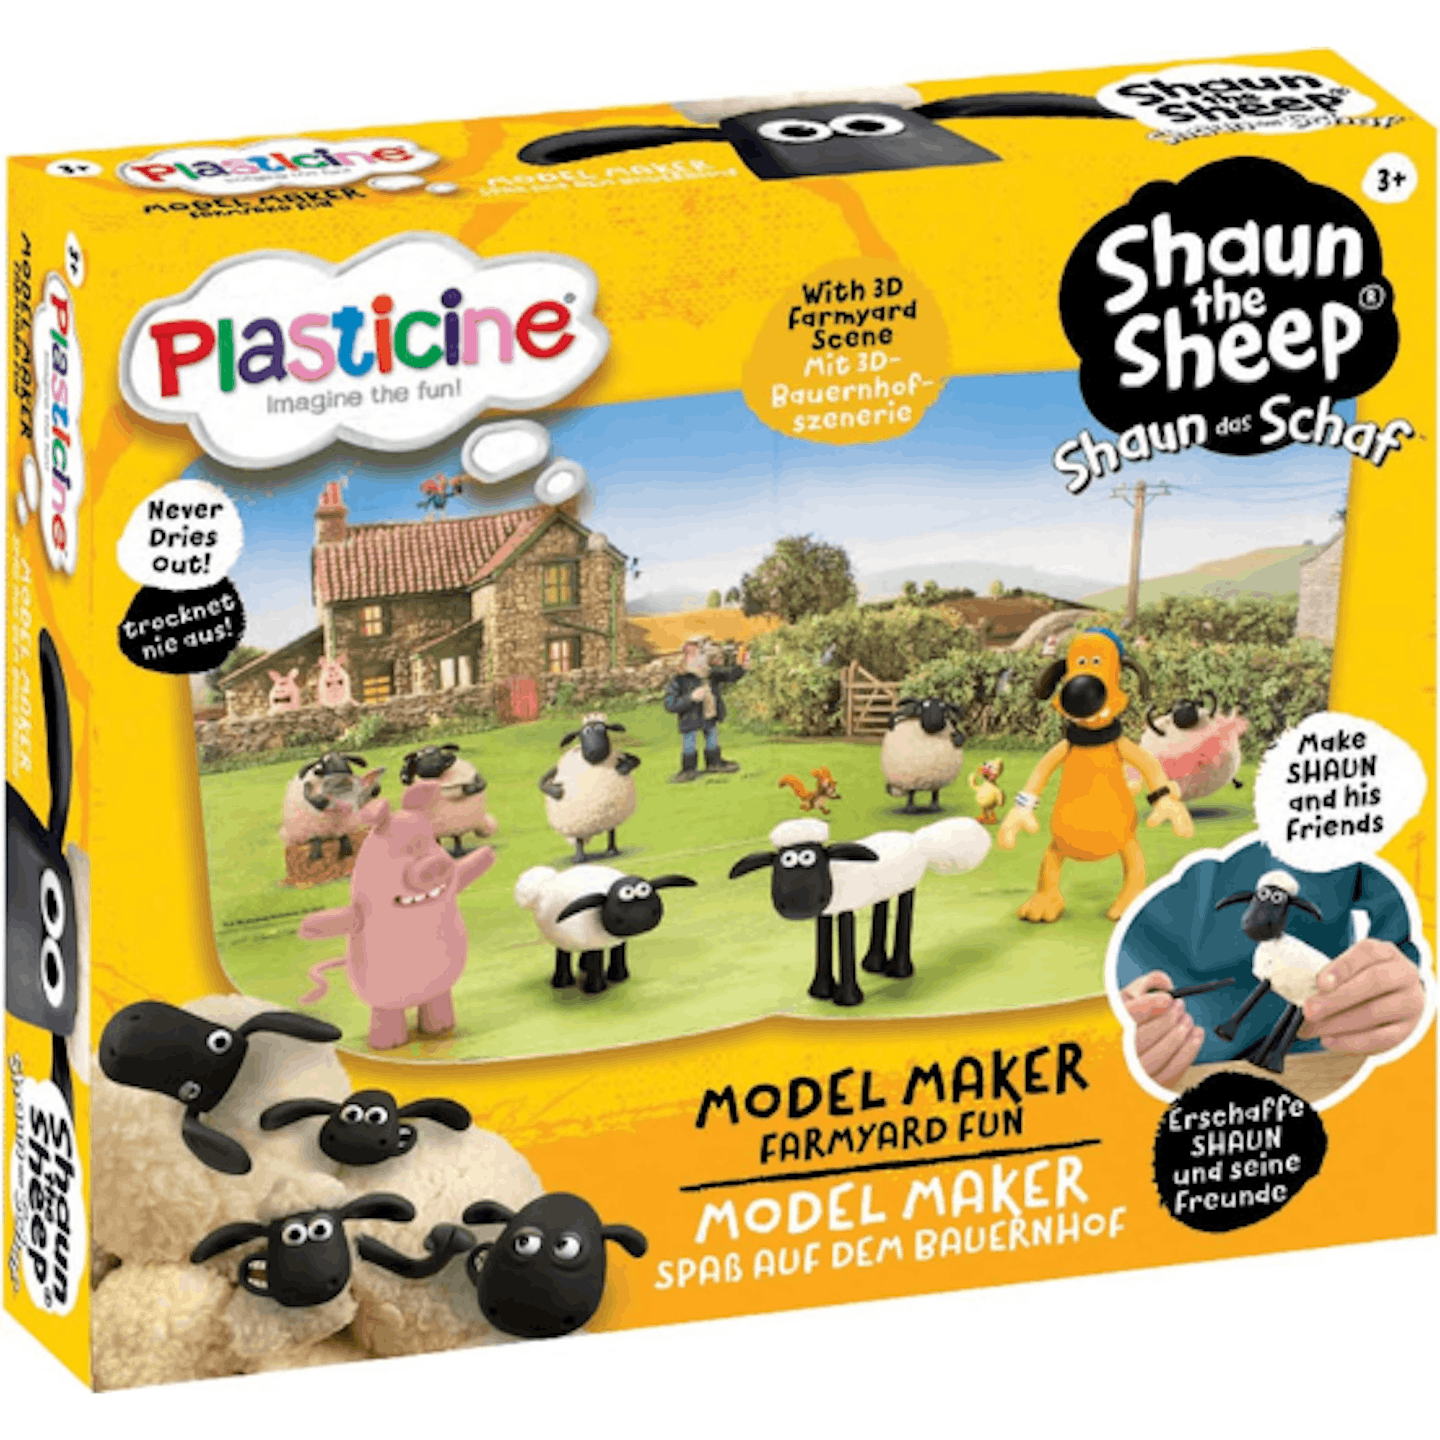 Shaun the Sheep plasticine set